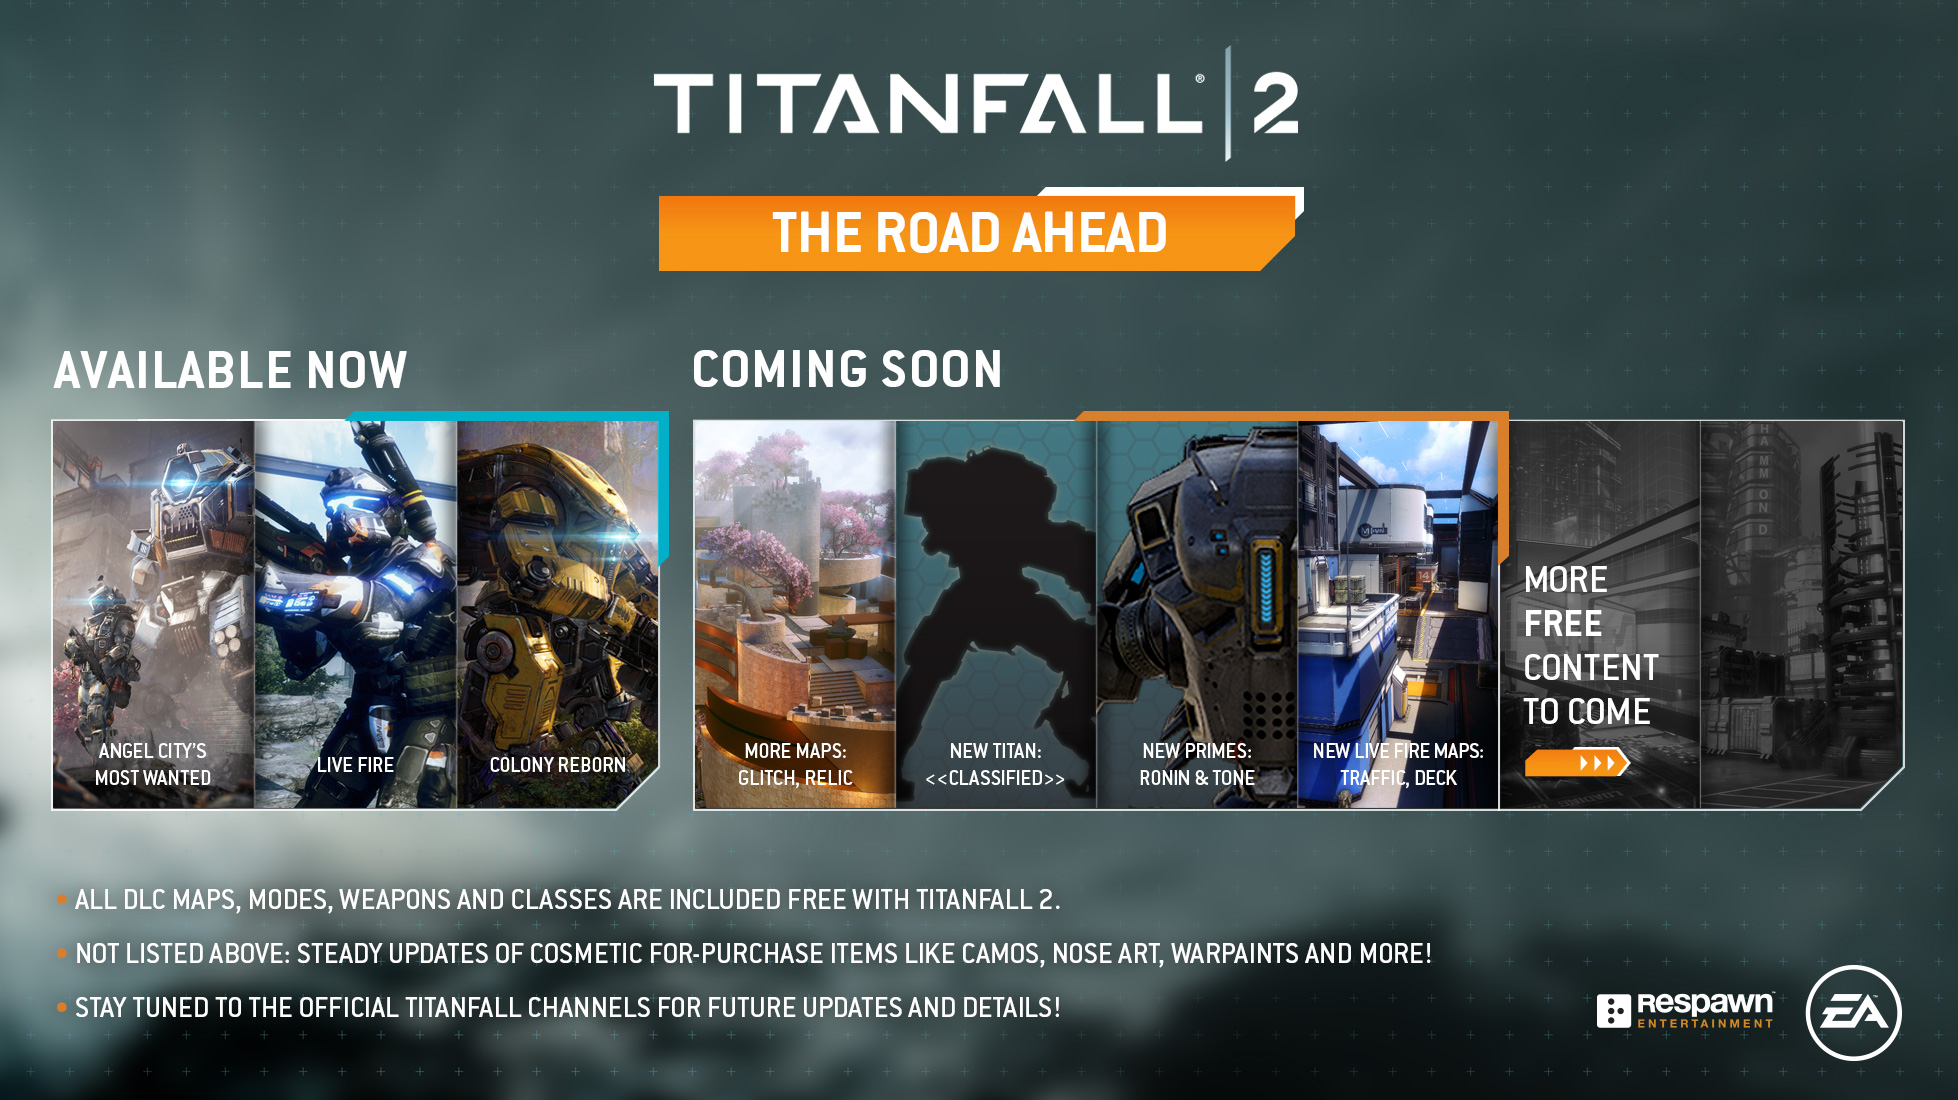 Titanfall 2 DLC Trailer Introduces A New Multiplayer Titan - Game Informer